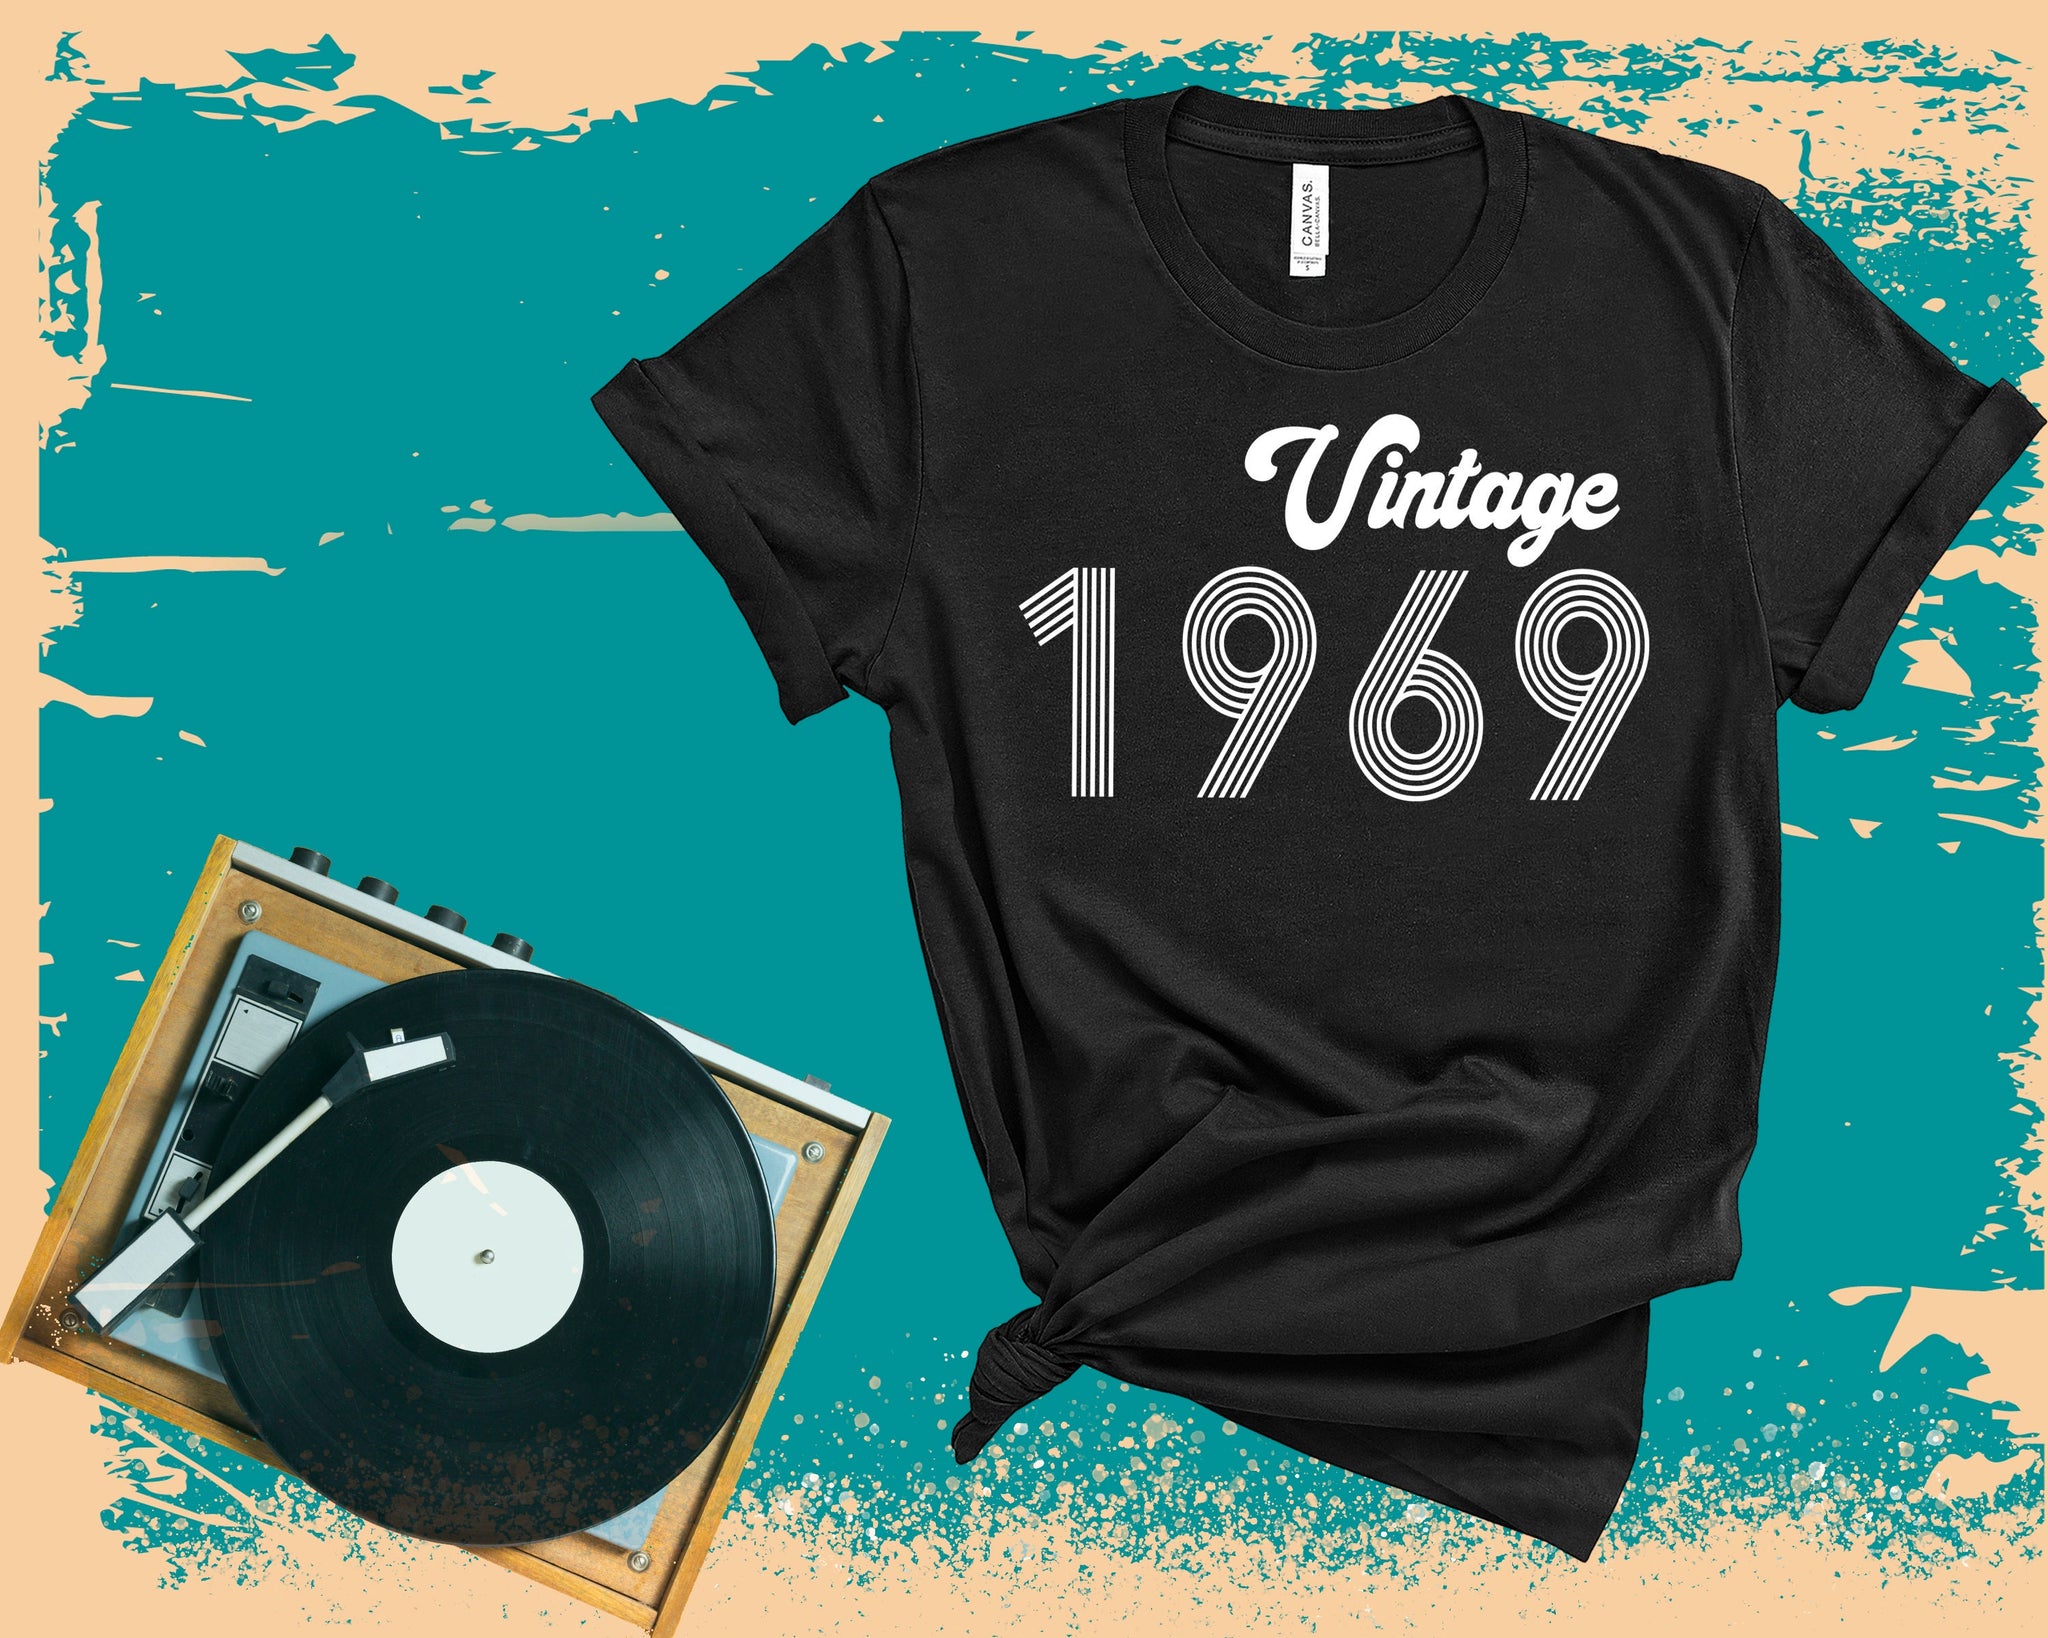 Vintage Birth Year T-shirt - Unisex Shirt - Birth Year Shirt - Personalized Tee - Custom Birth Year - 1969 - Antique - 80's - 70's - 60's